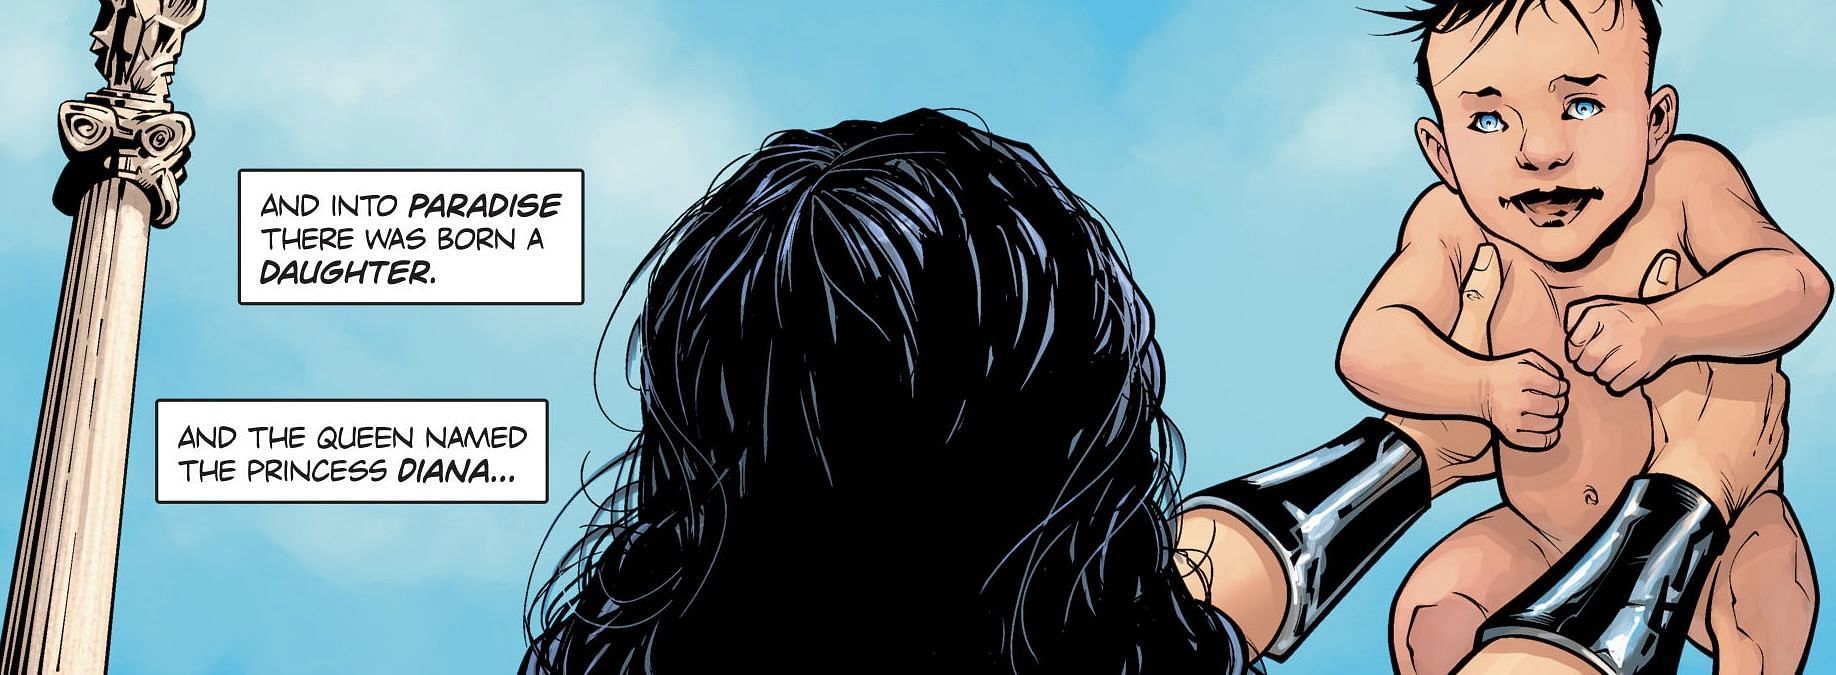 Wonder Woman: Rebirth #1 (Image via DC Comics)